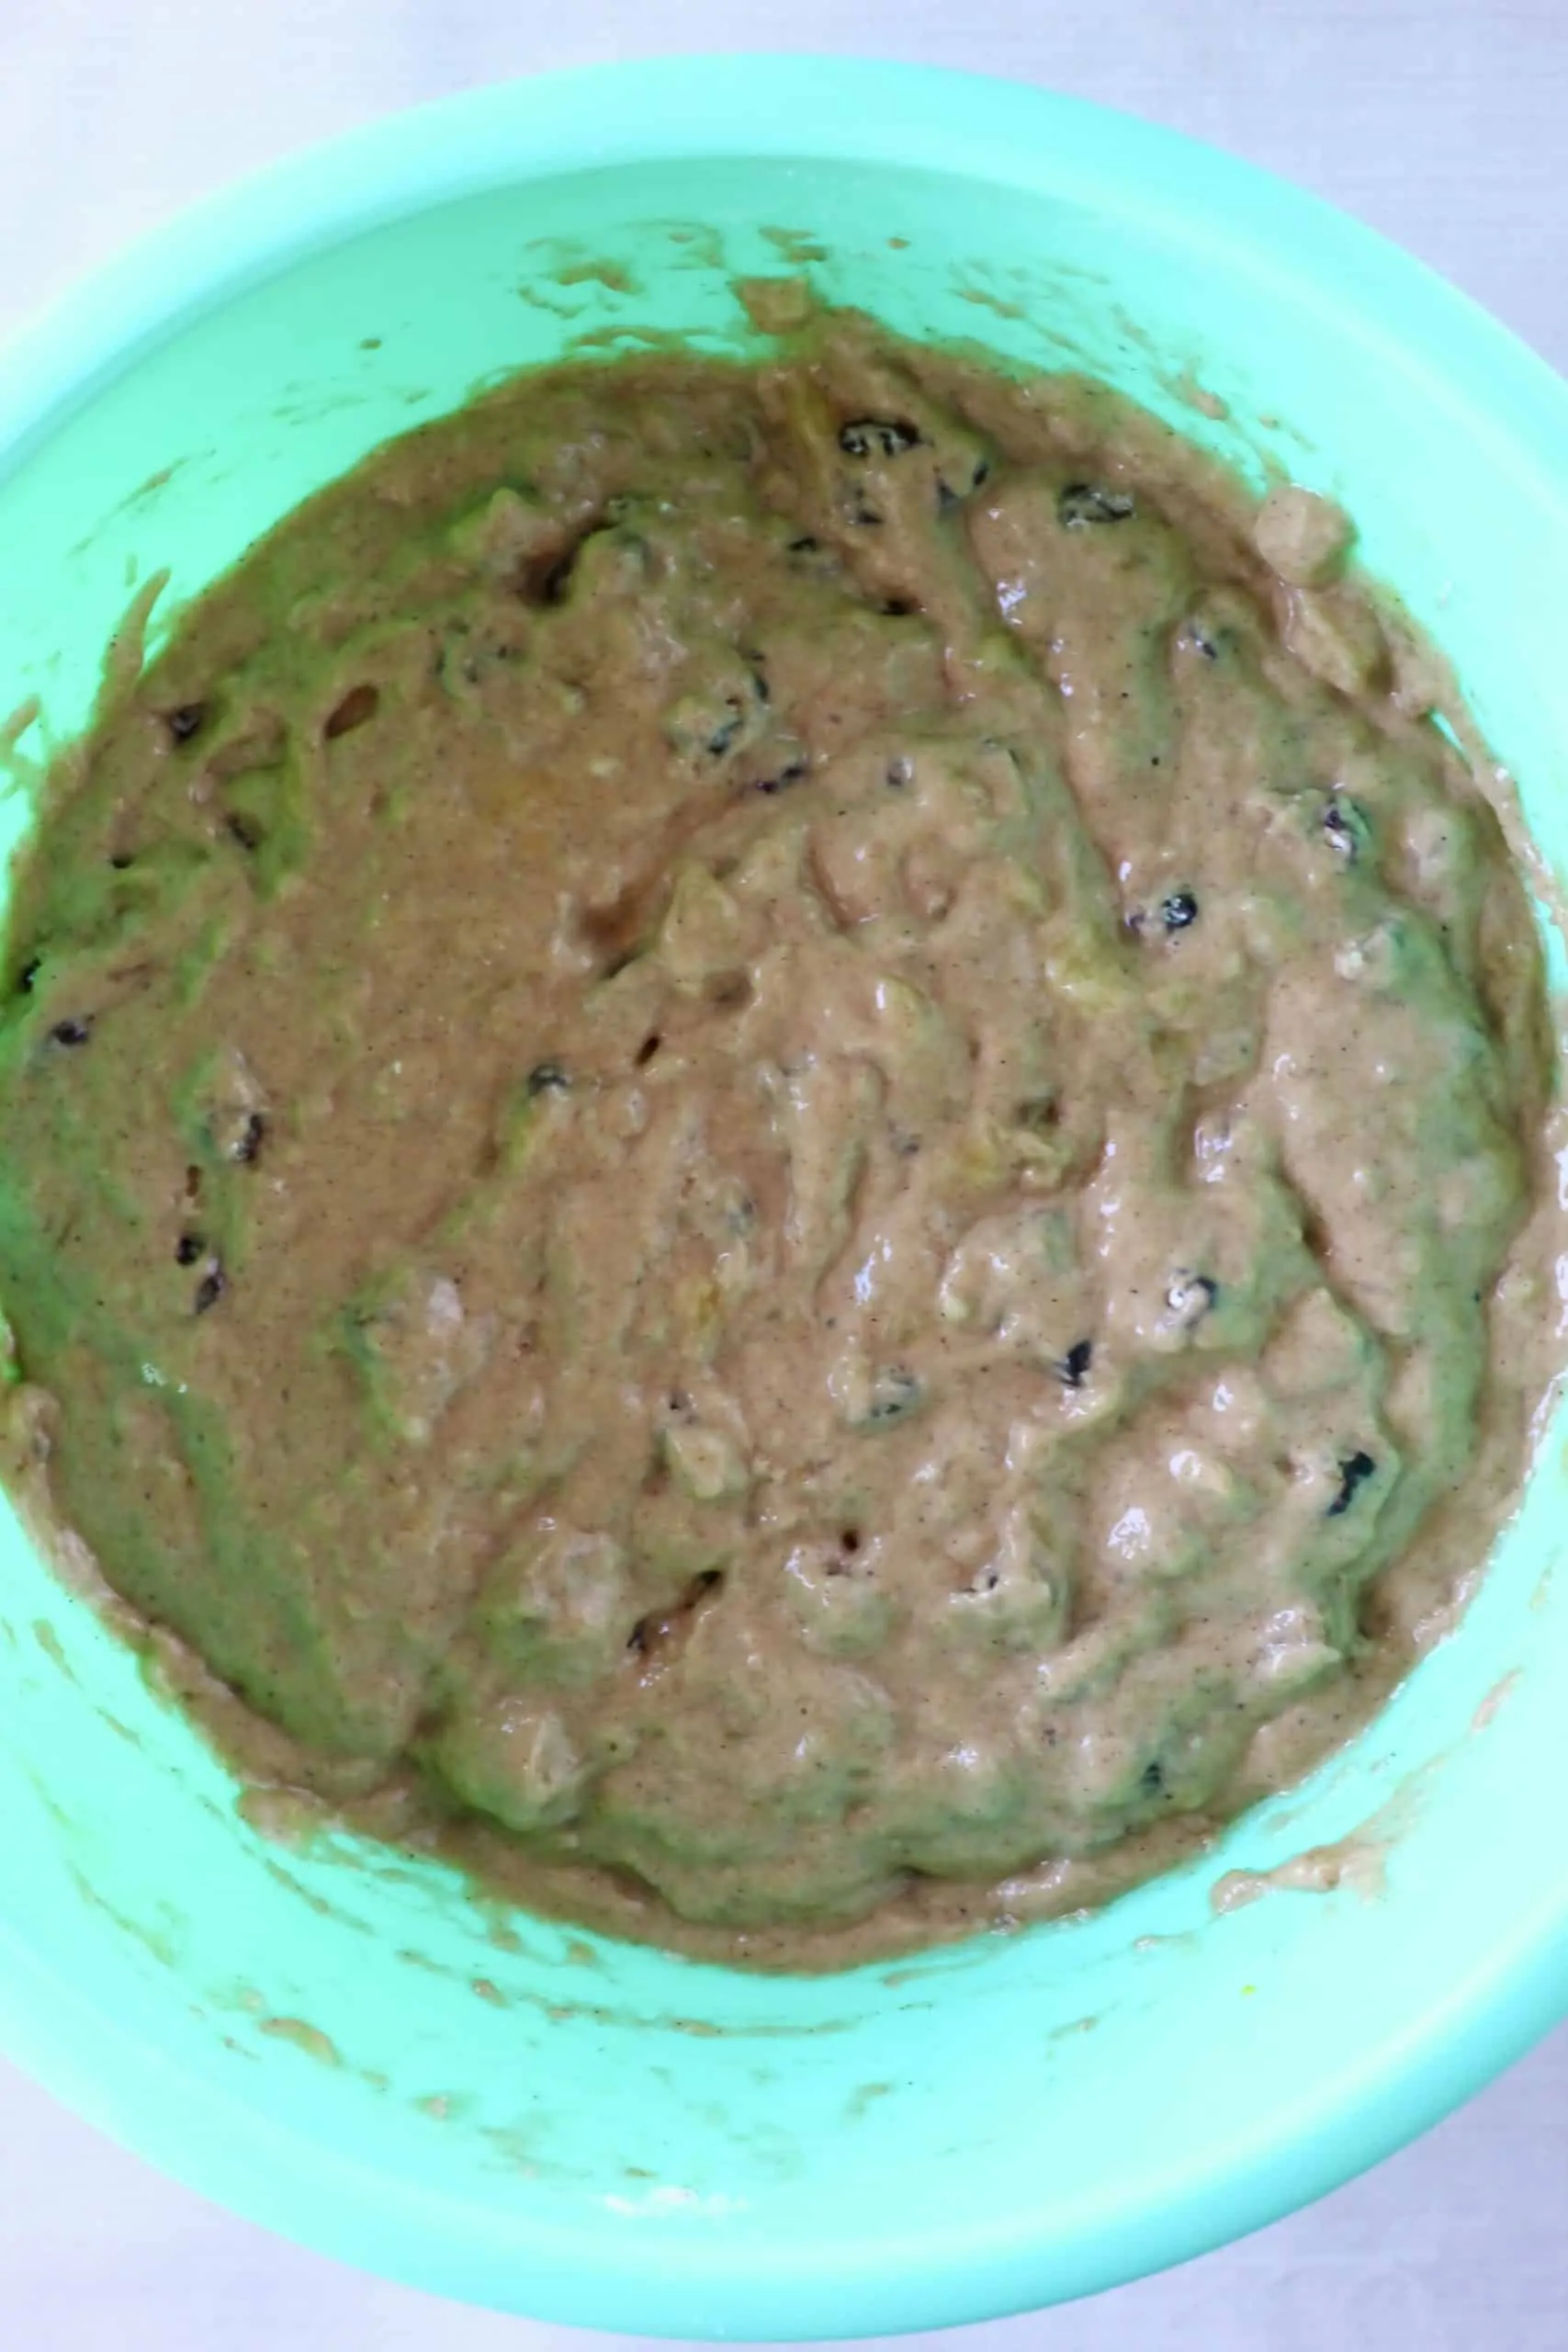 Raw gluten-free vegan banana cake batter with raisins in a mixing bowl